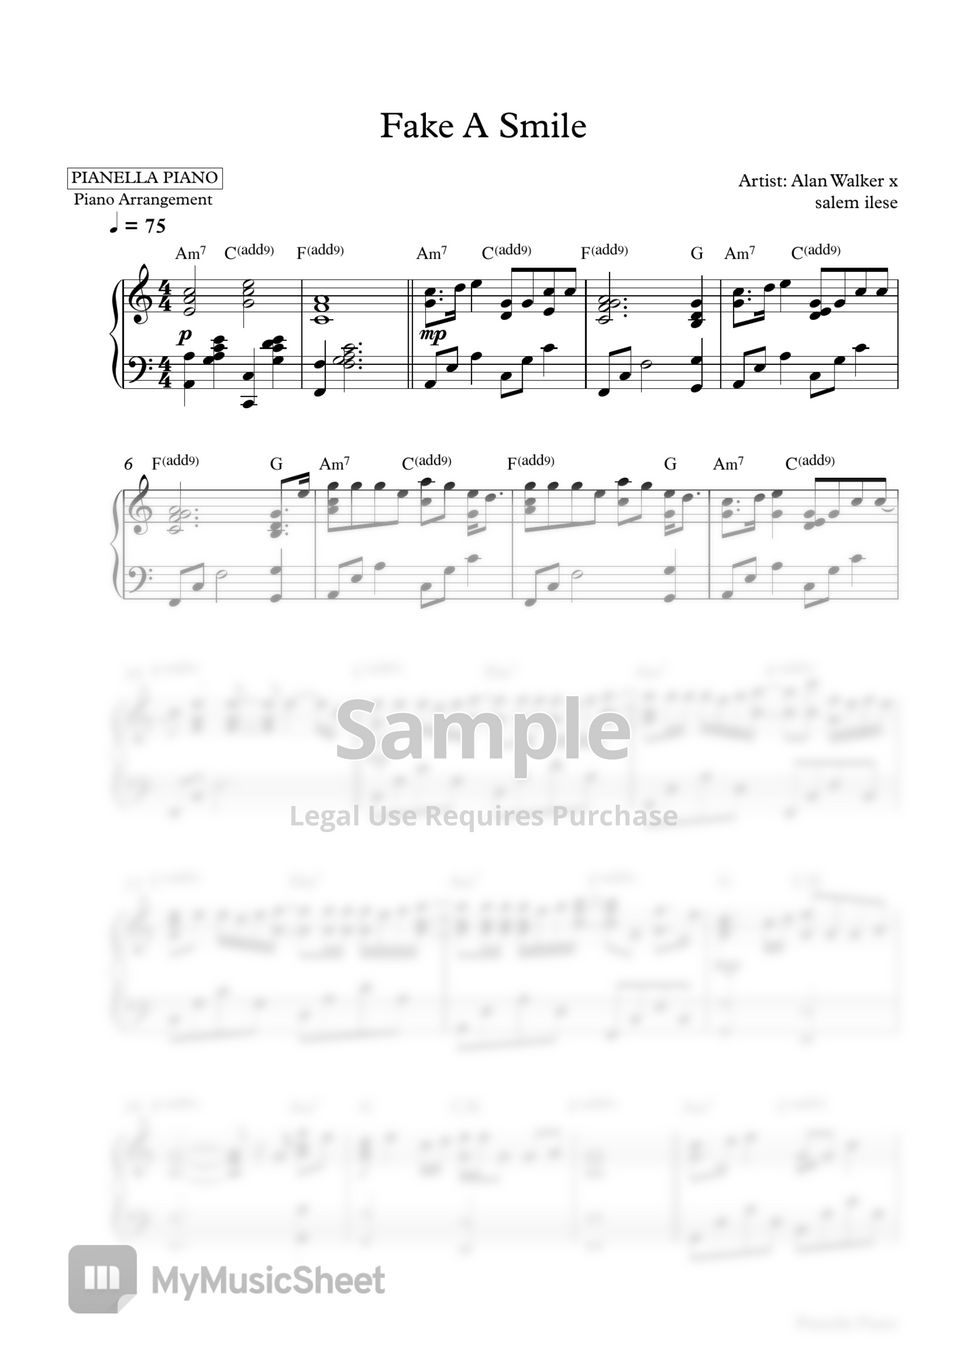 Alan Walker x salem ilese - Fake A Smile (Piano Sheet) by Pianella Piano